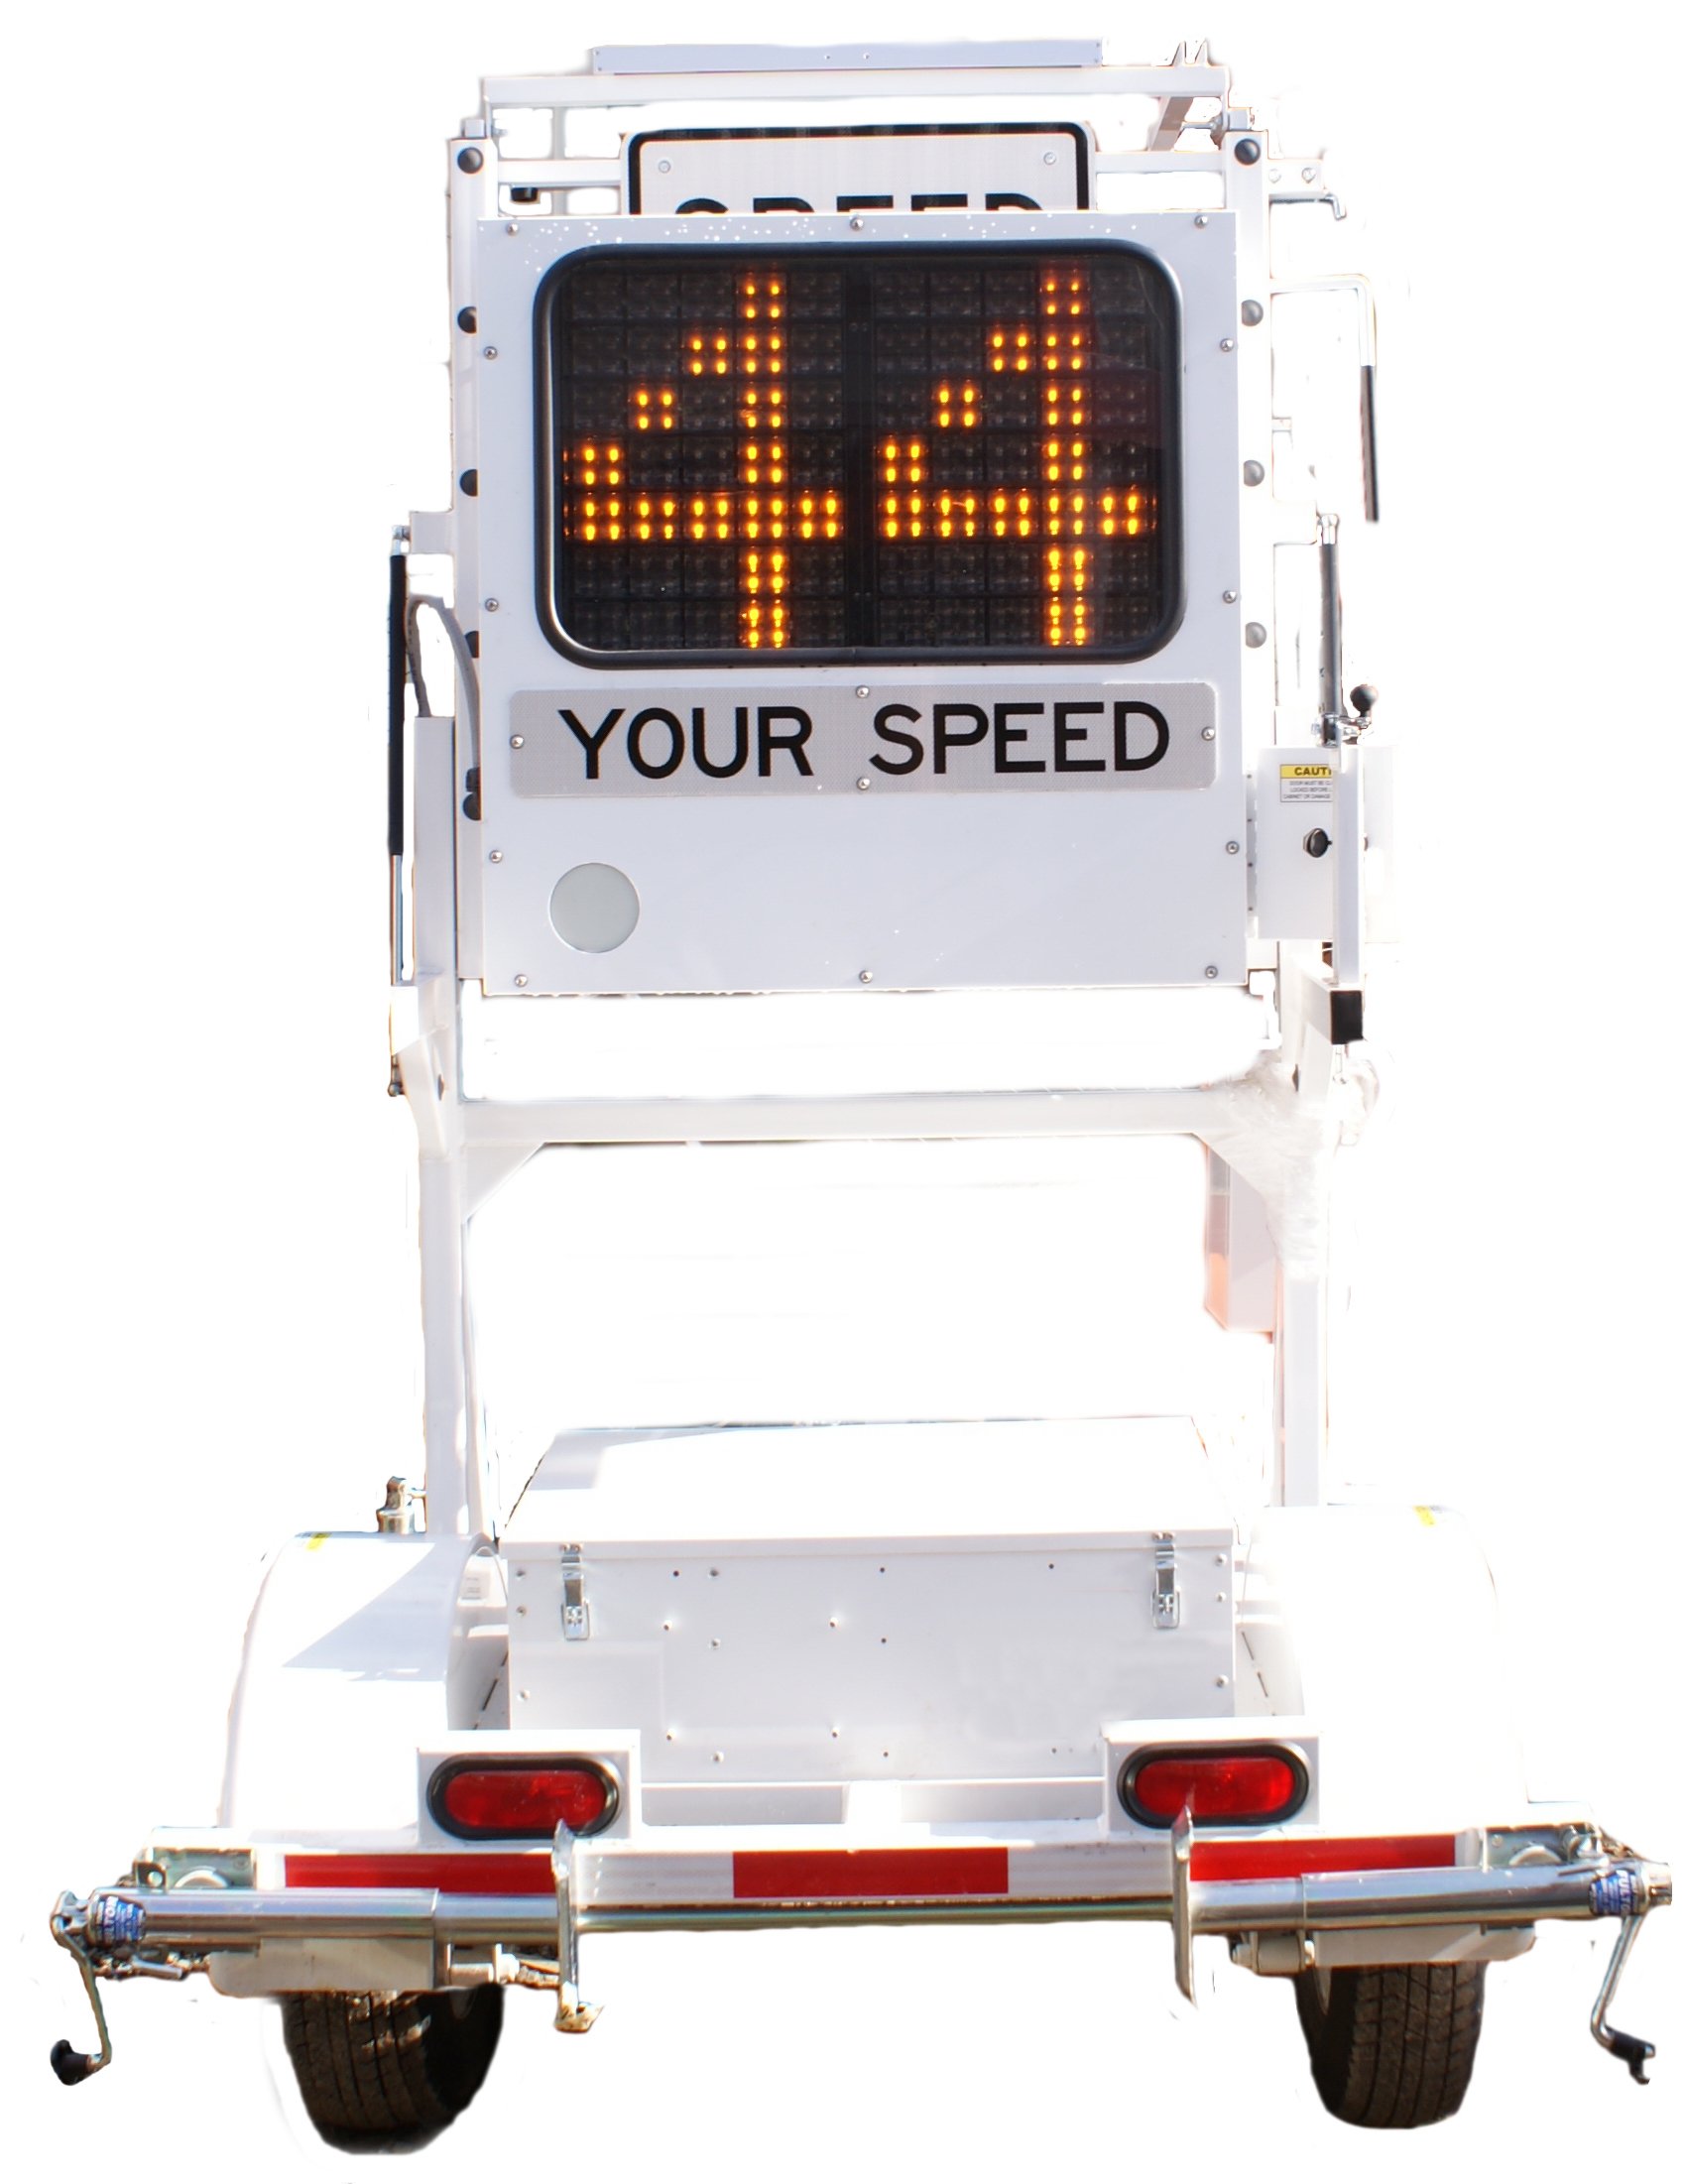 Mobile speed display unit 